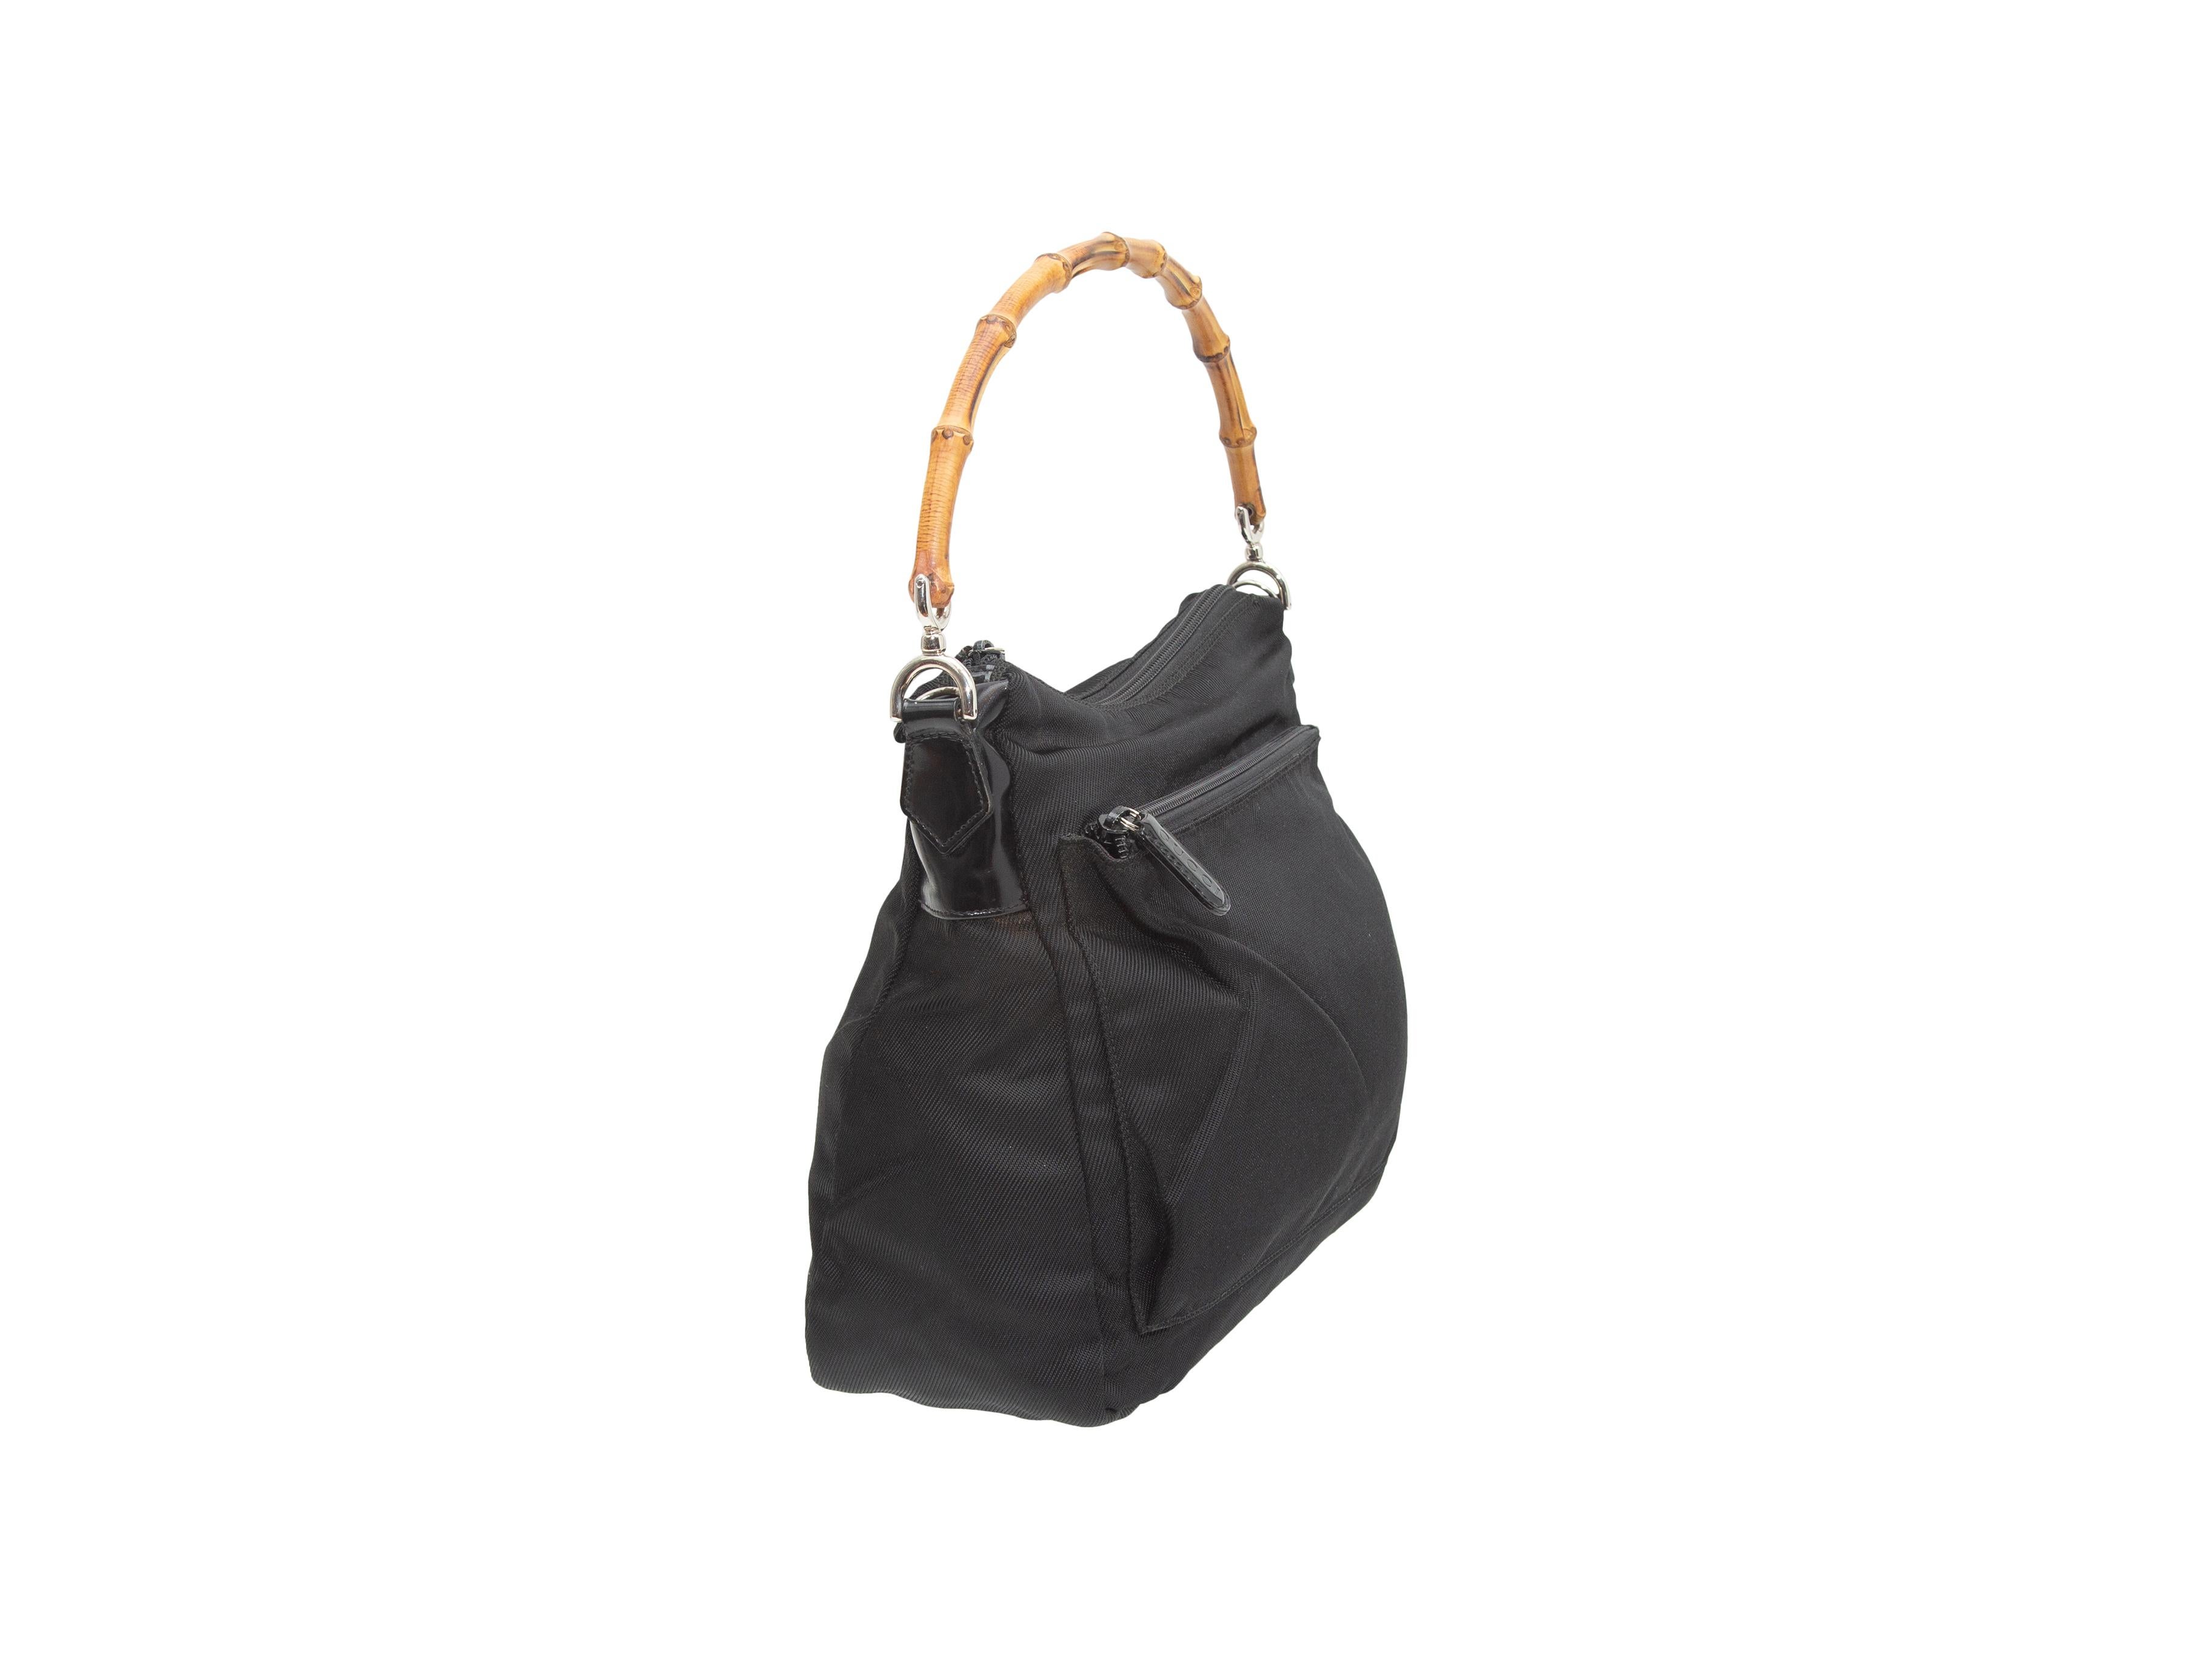 Product details: Vintage black nylon bag by Gucci. Bamboo top handle. Silver-tone hardware. Exterior front pocket. Optional shoulder strap. Zip closure at top. 11